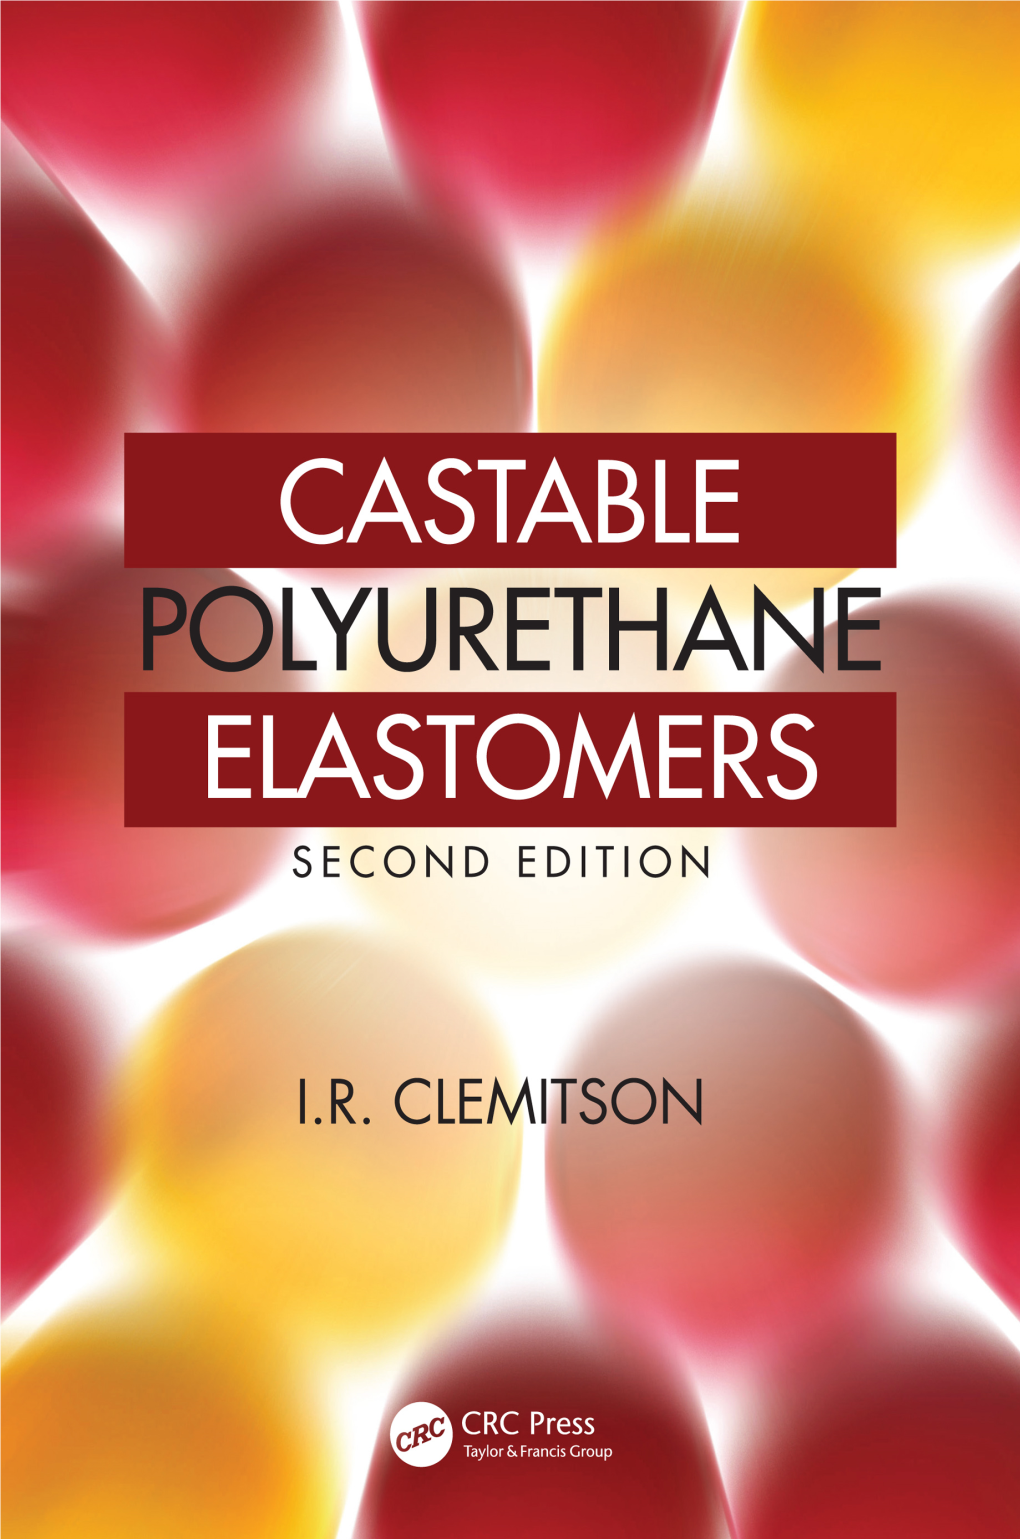 Castable Polyurethane Elastomers, Second Edition